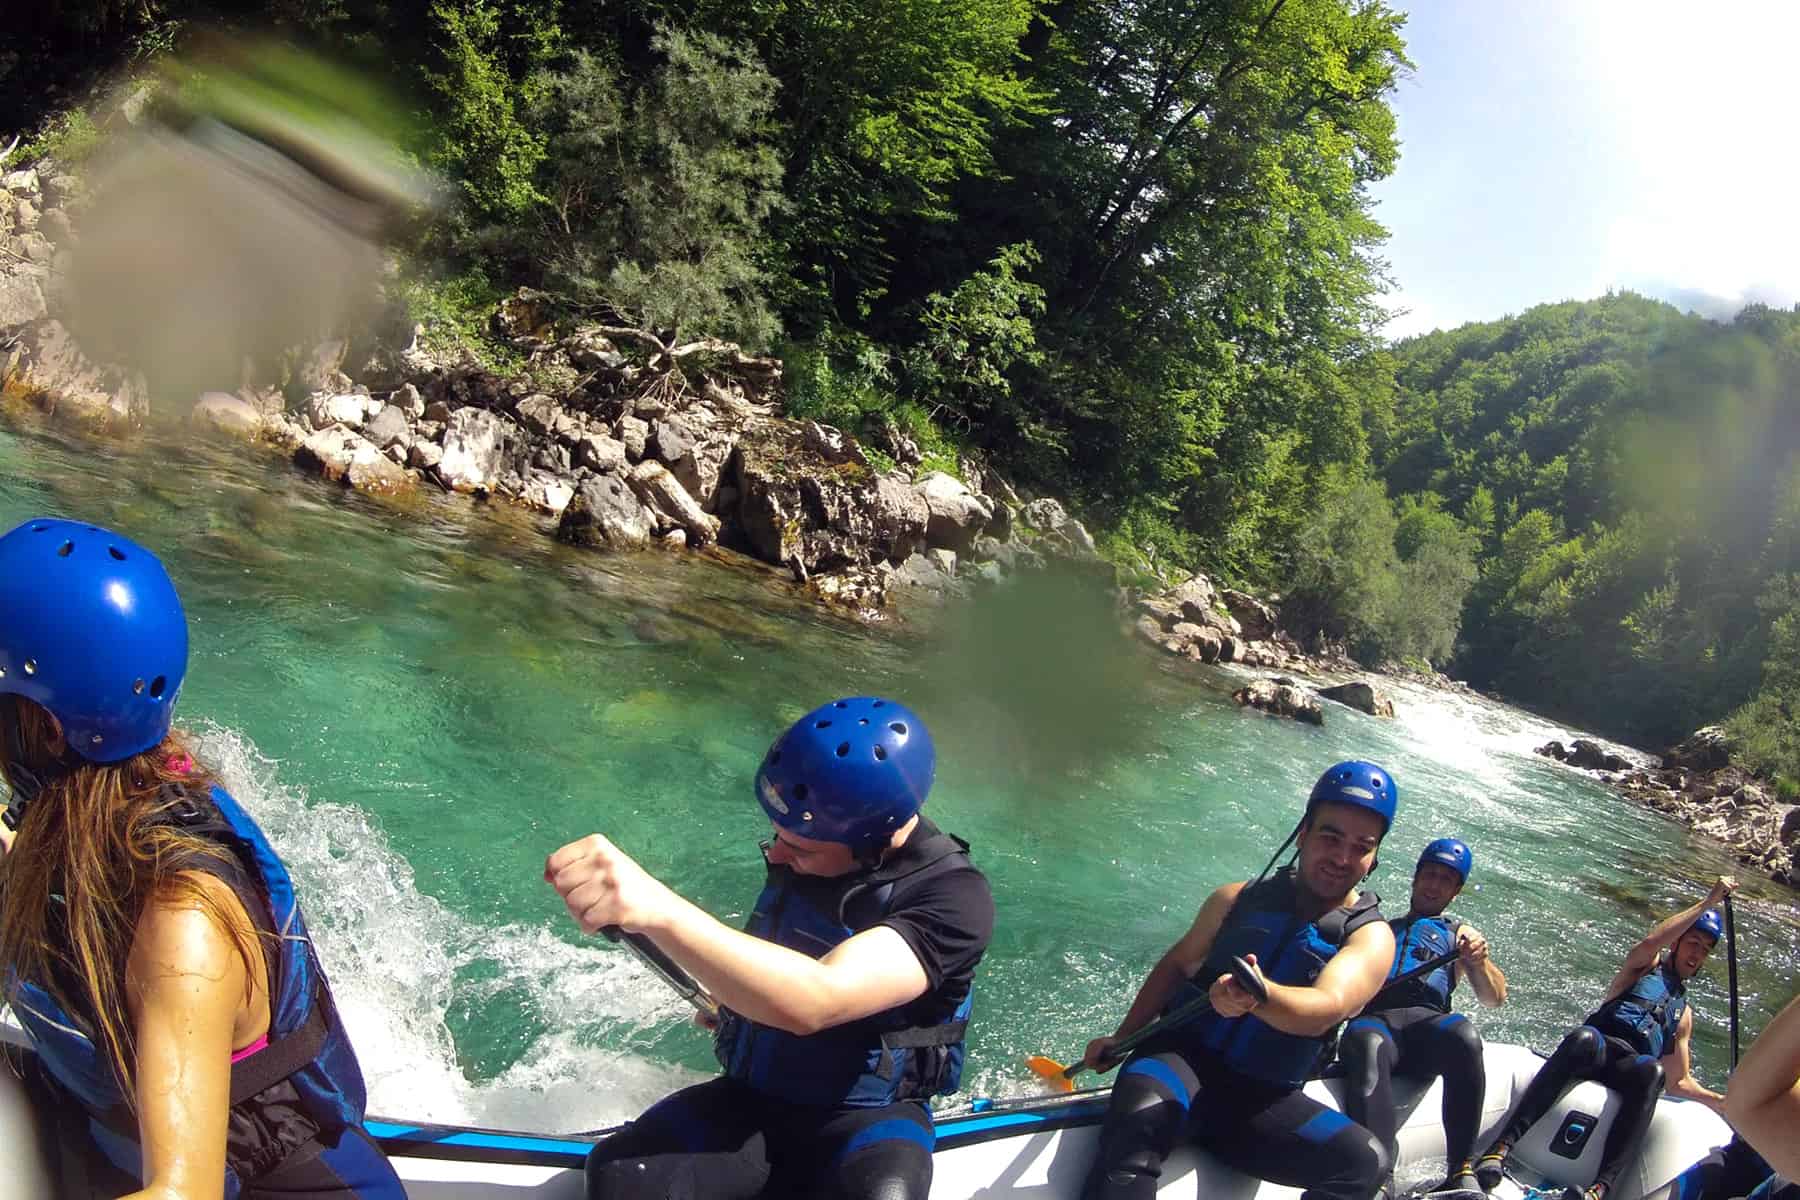 Rafting on river tara with Montenegro Adventure